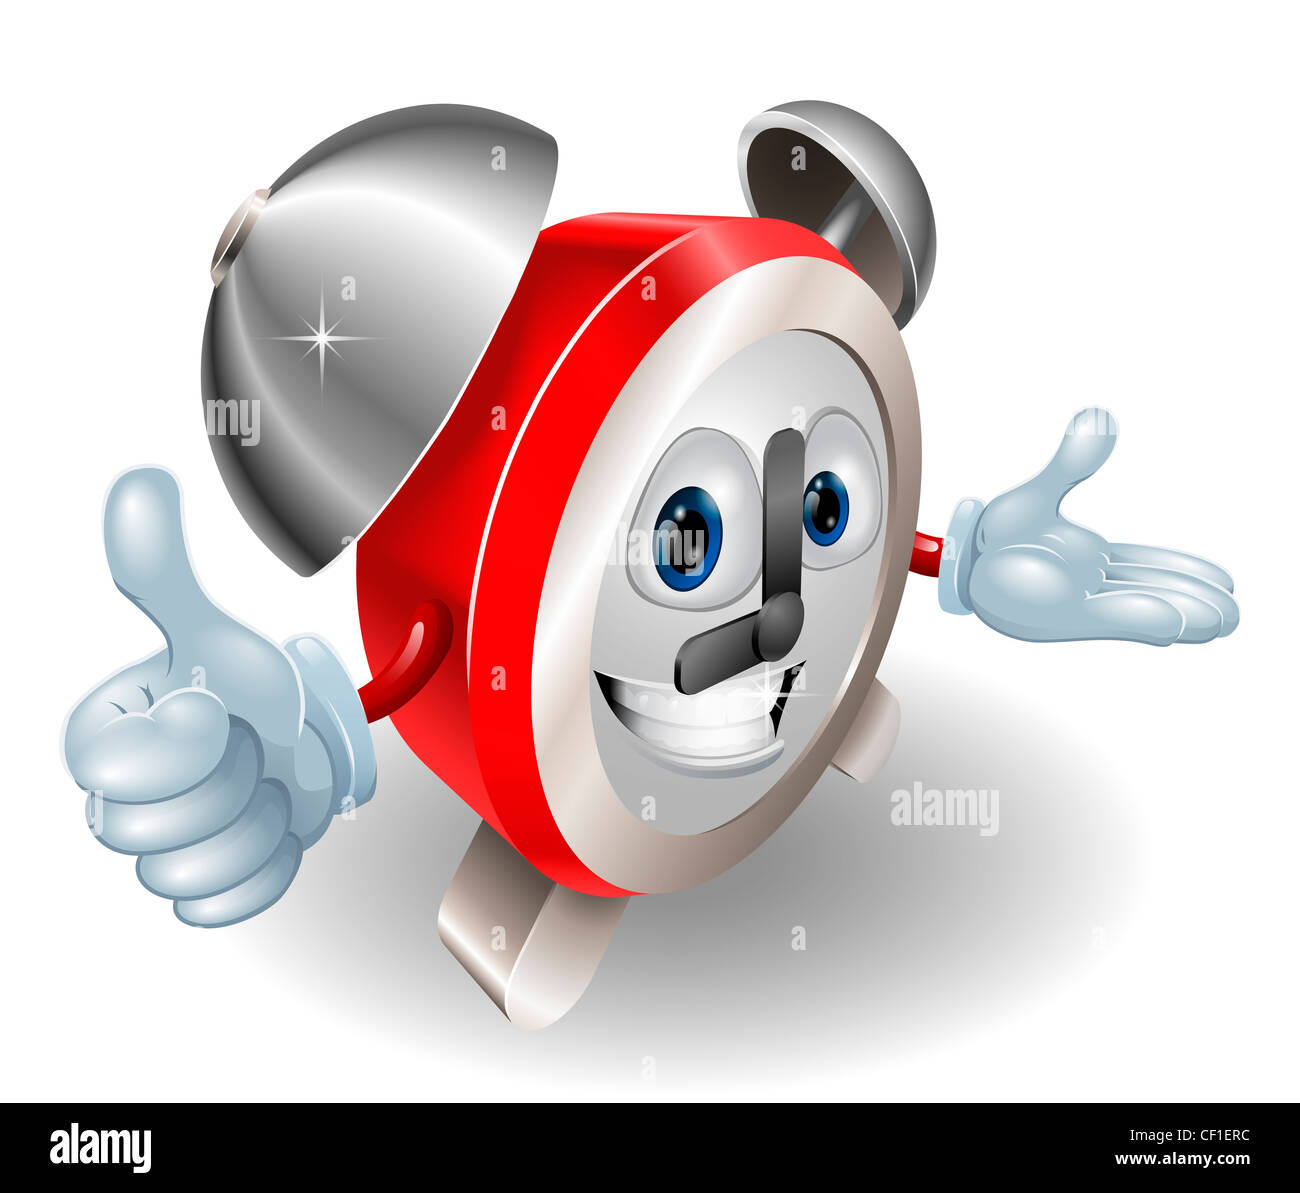 Cute cartoon character alarm clock giving a thumbs up Stock Photo